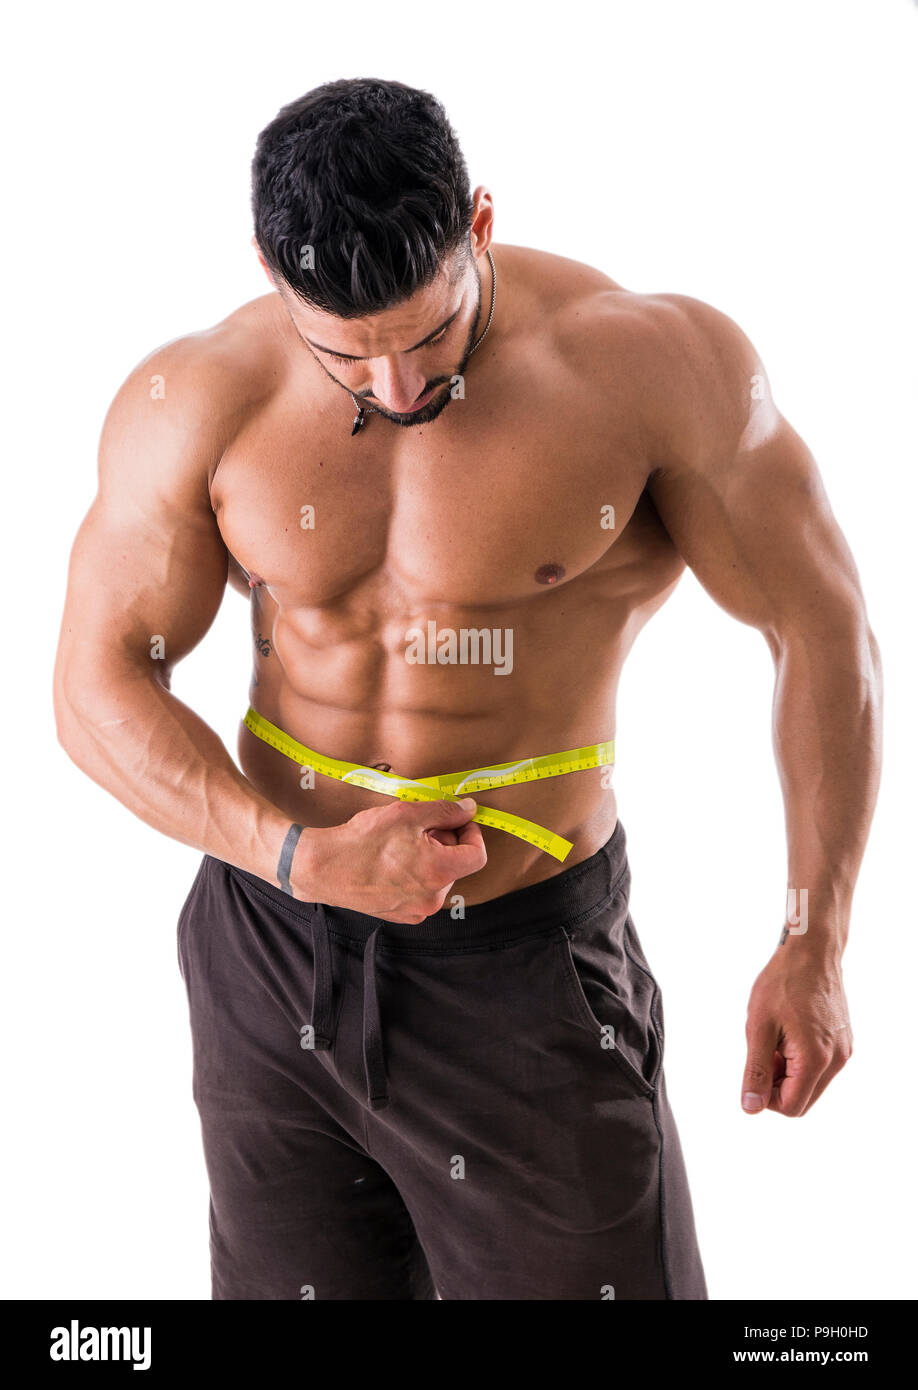 https://c8.alamy.com/comp/P9H0HD/muscular-bodybuilder-man-measuring-belly-with-tape-measure-P9H0HD.jpg